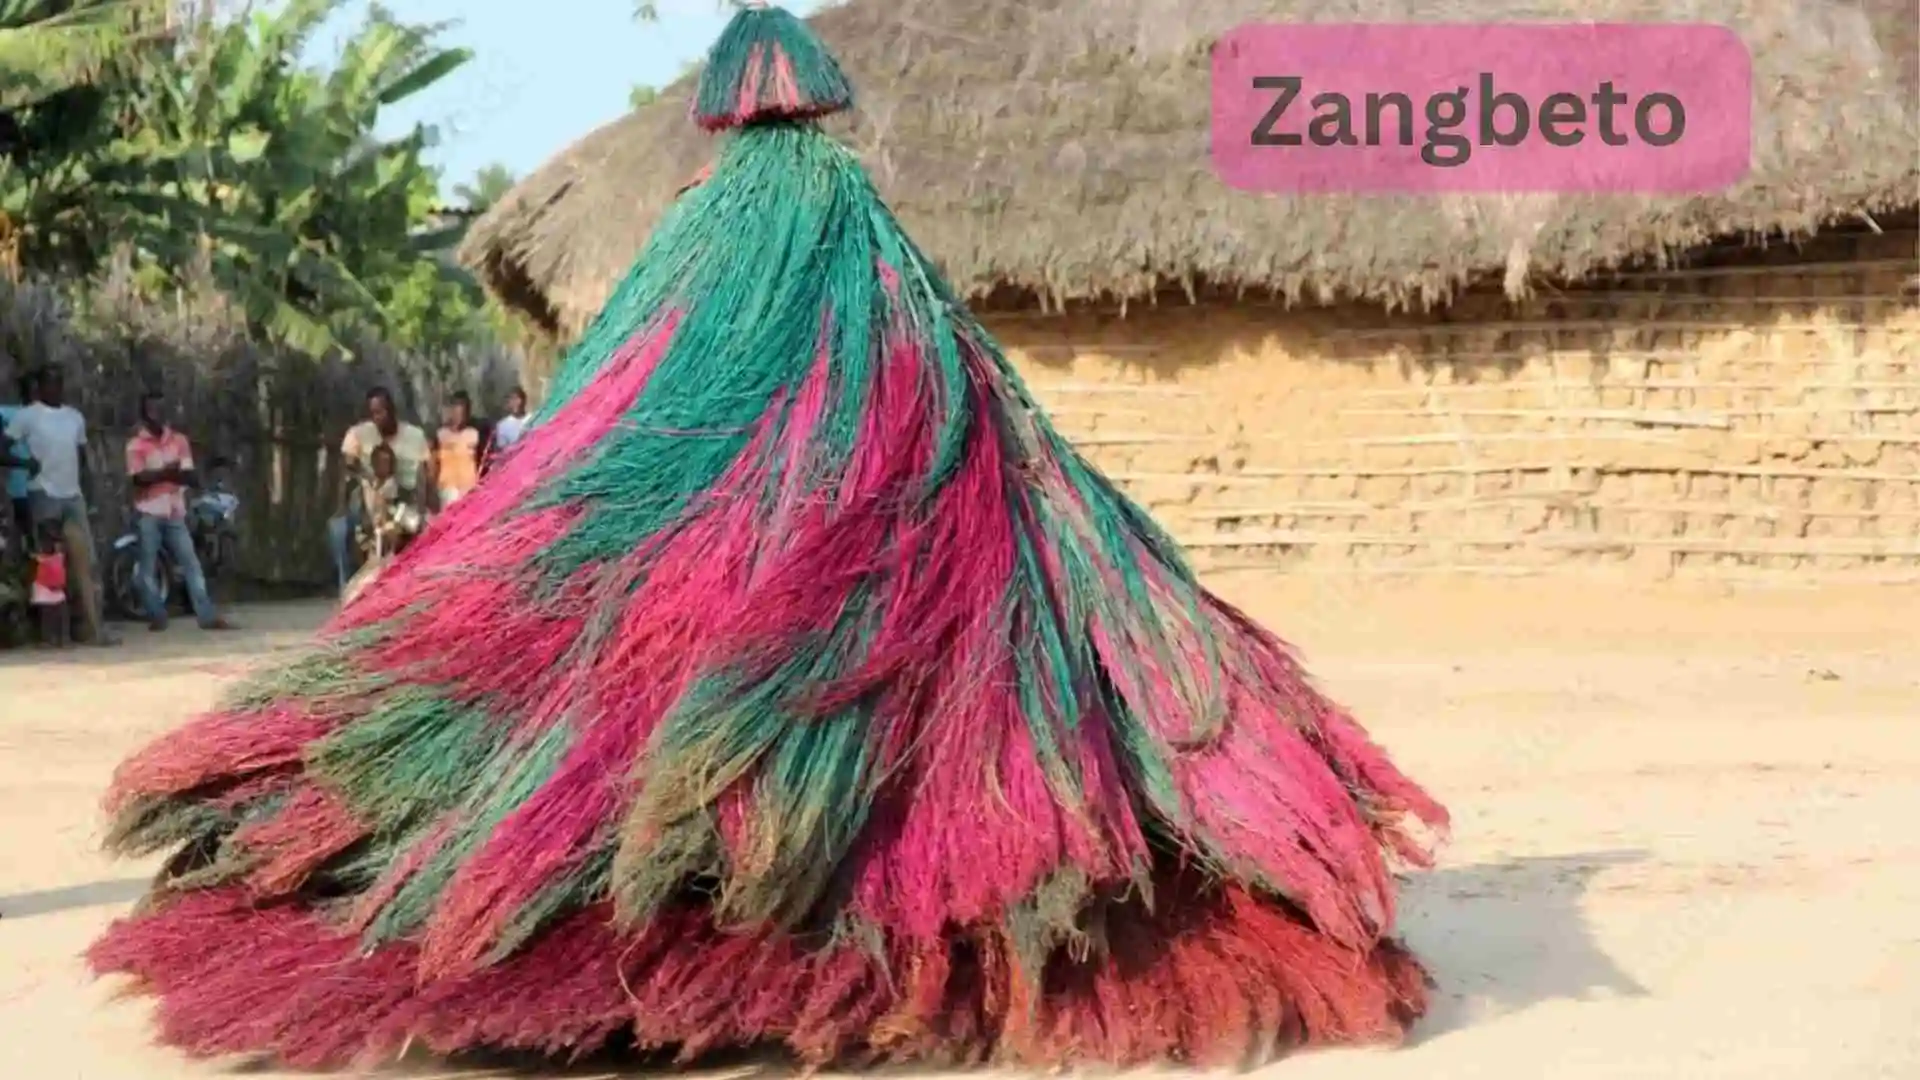 Zangbeto | An Empty Dancing Structure